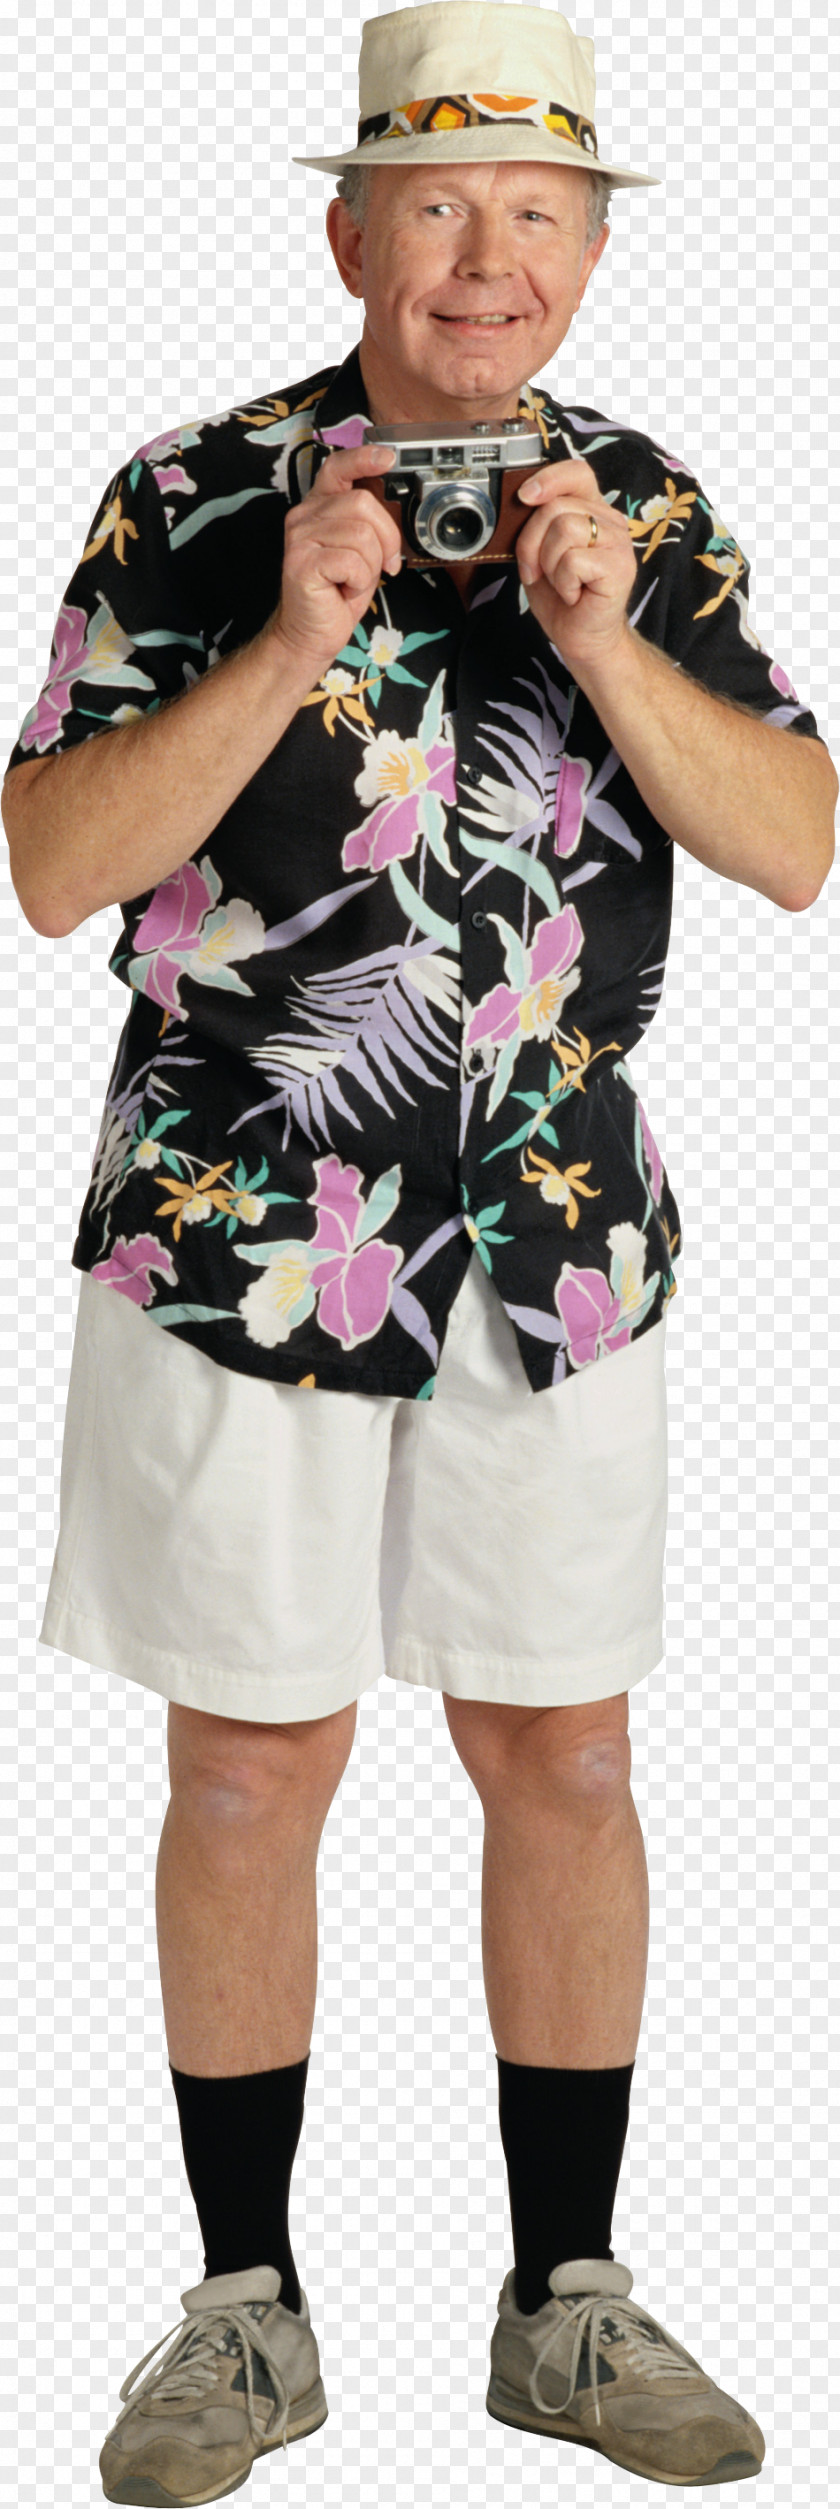 Dwayne Johnson Guiri Costume Woman Clothing PNG